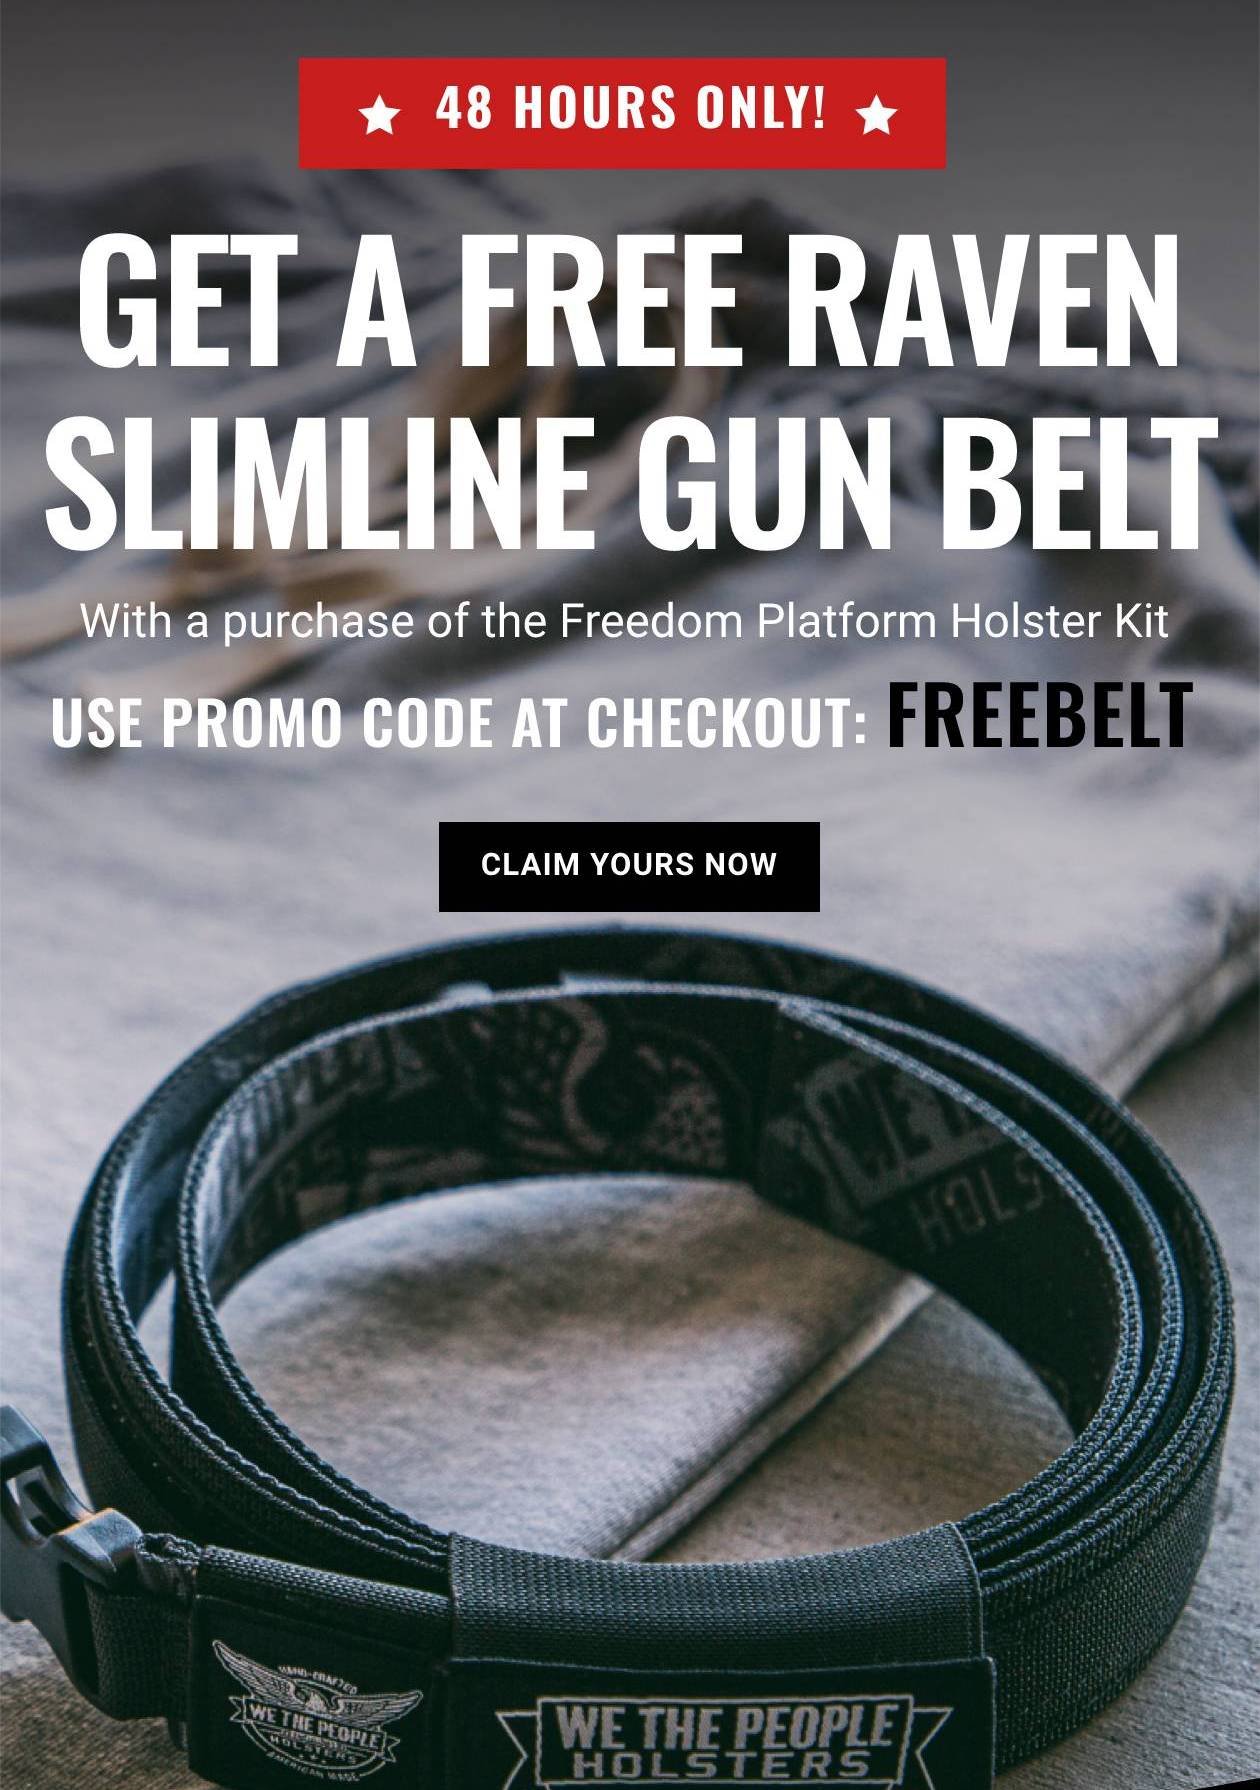 We the People Holsters: Get a FREE Raven Slimline Gun Belt